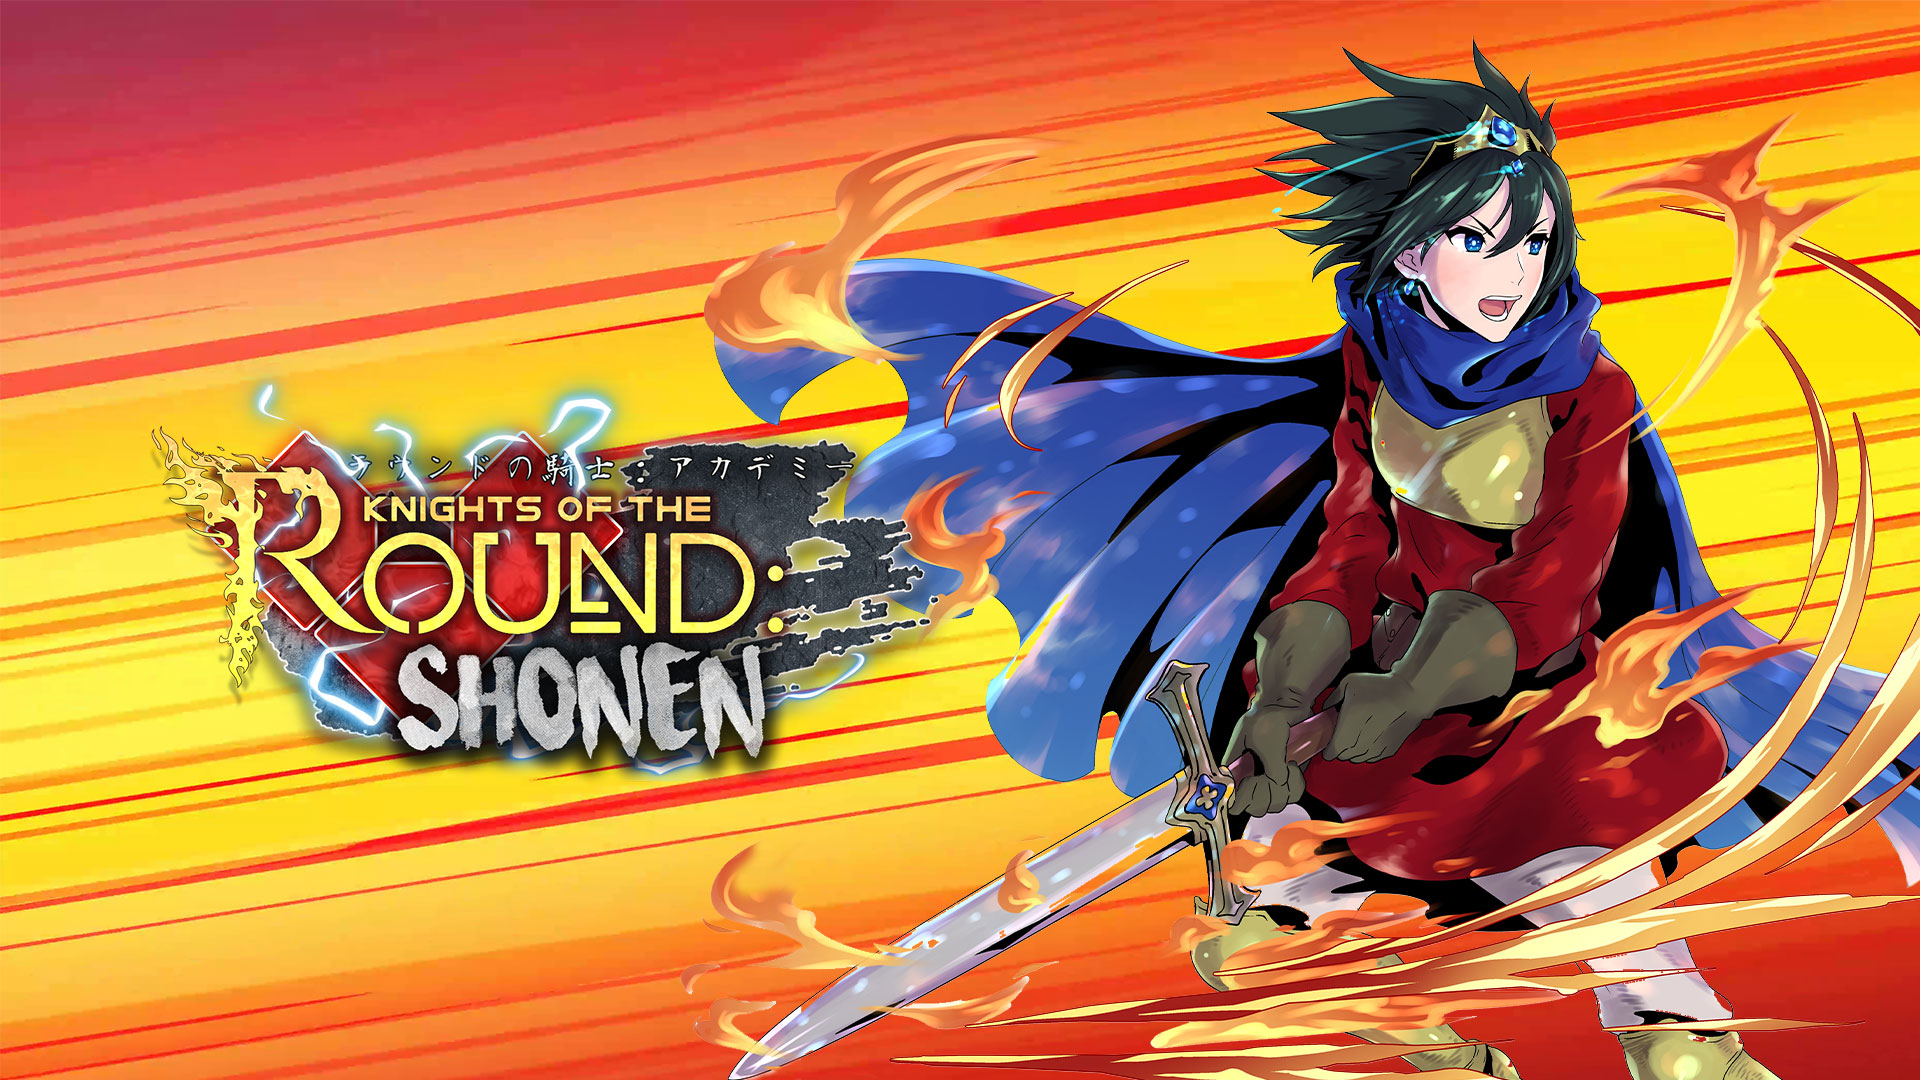 Knights of the Round: Shonen